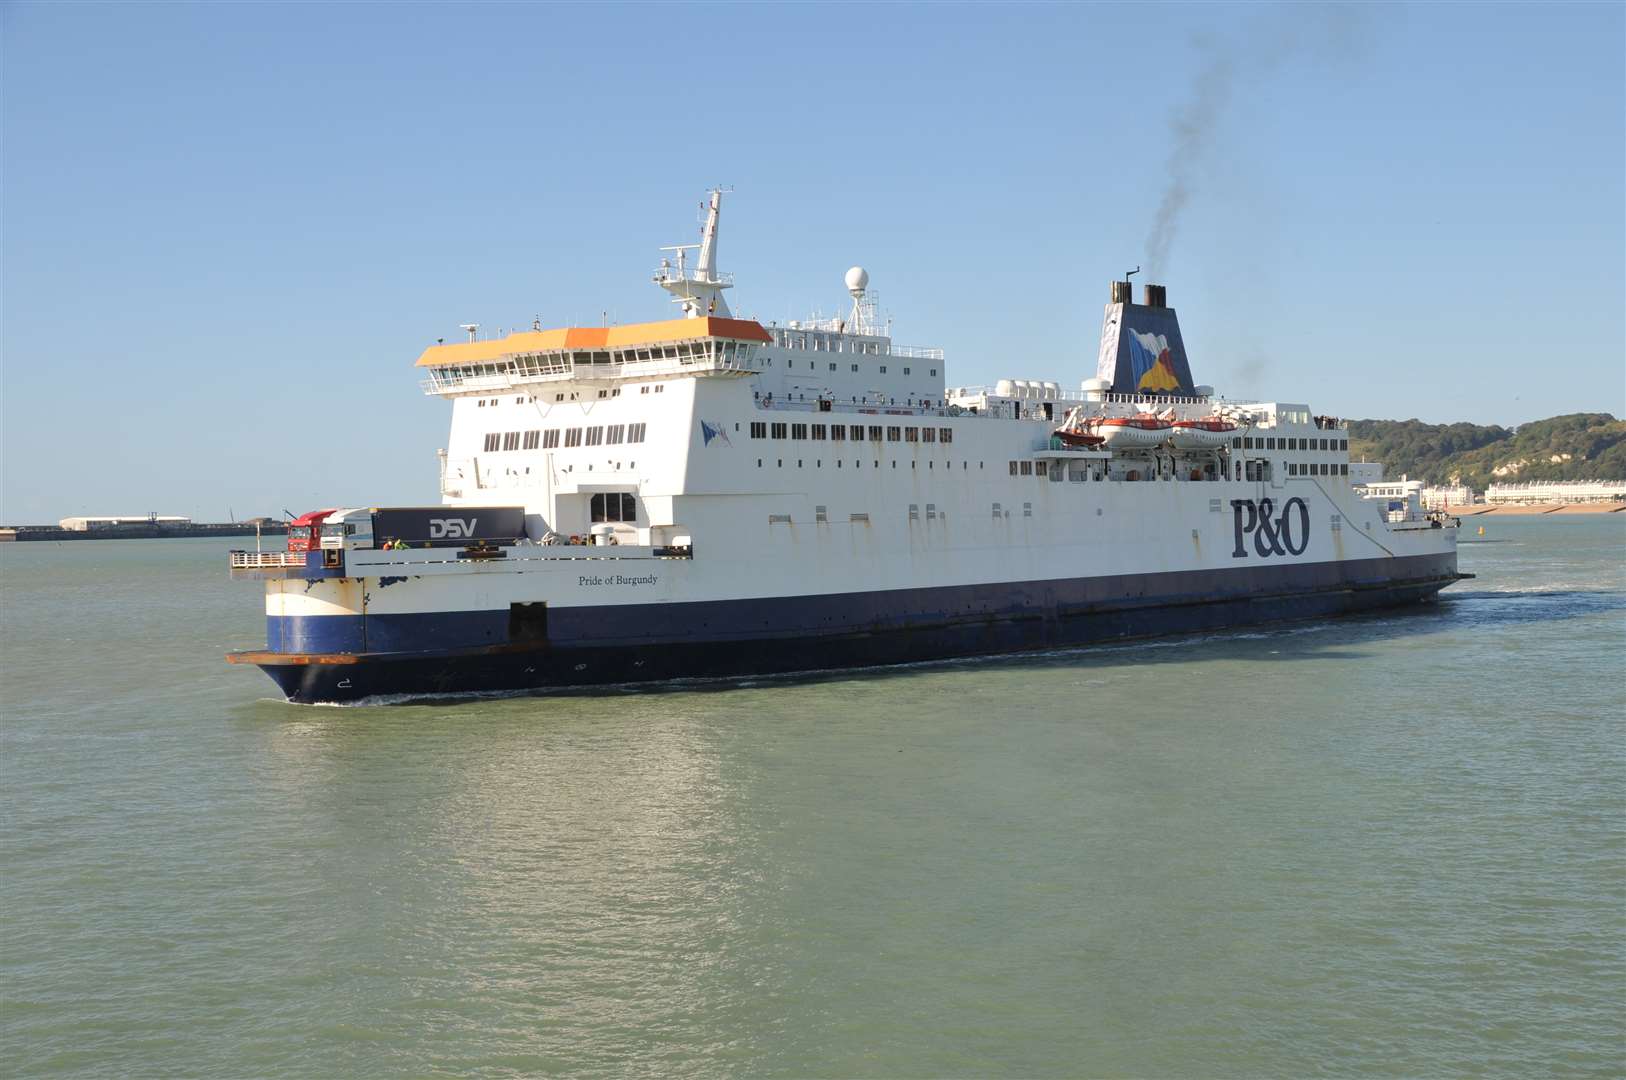 P&O ferry the Pride of Burgundy